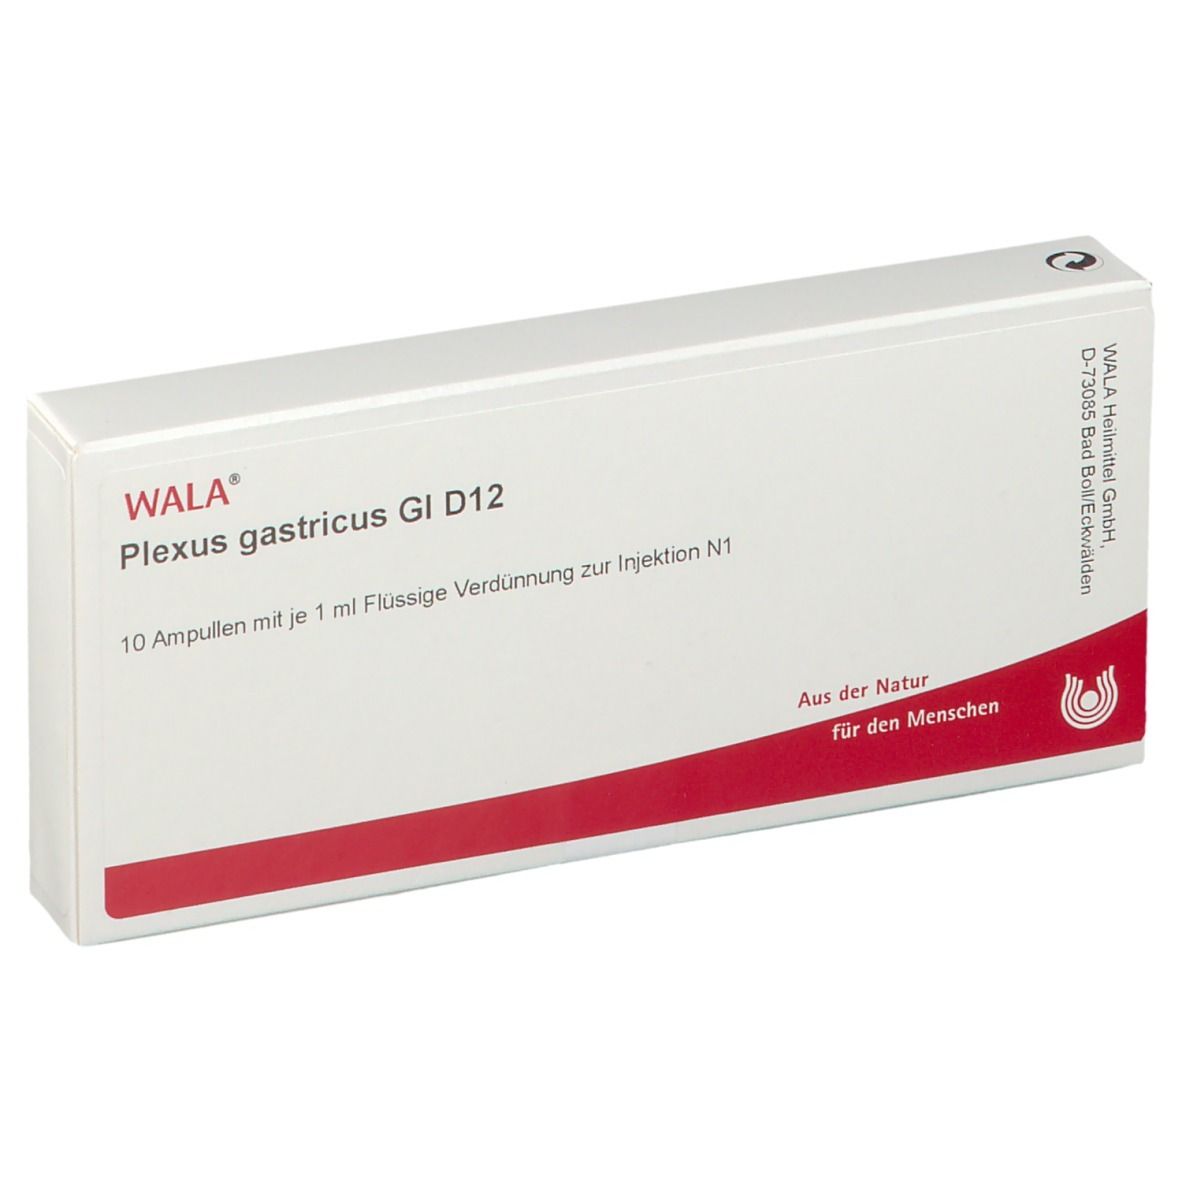 Wala® Plexus gastricus Gl D 12